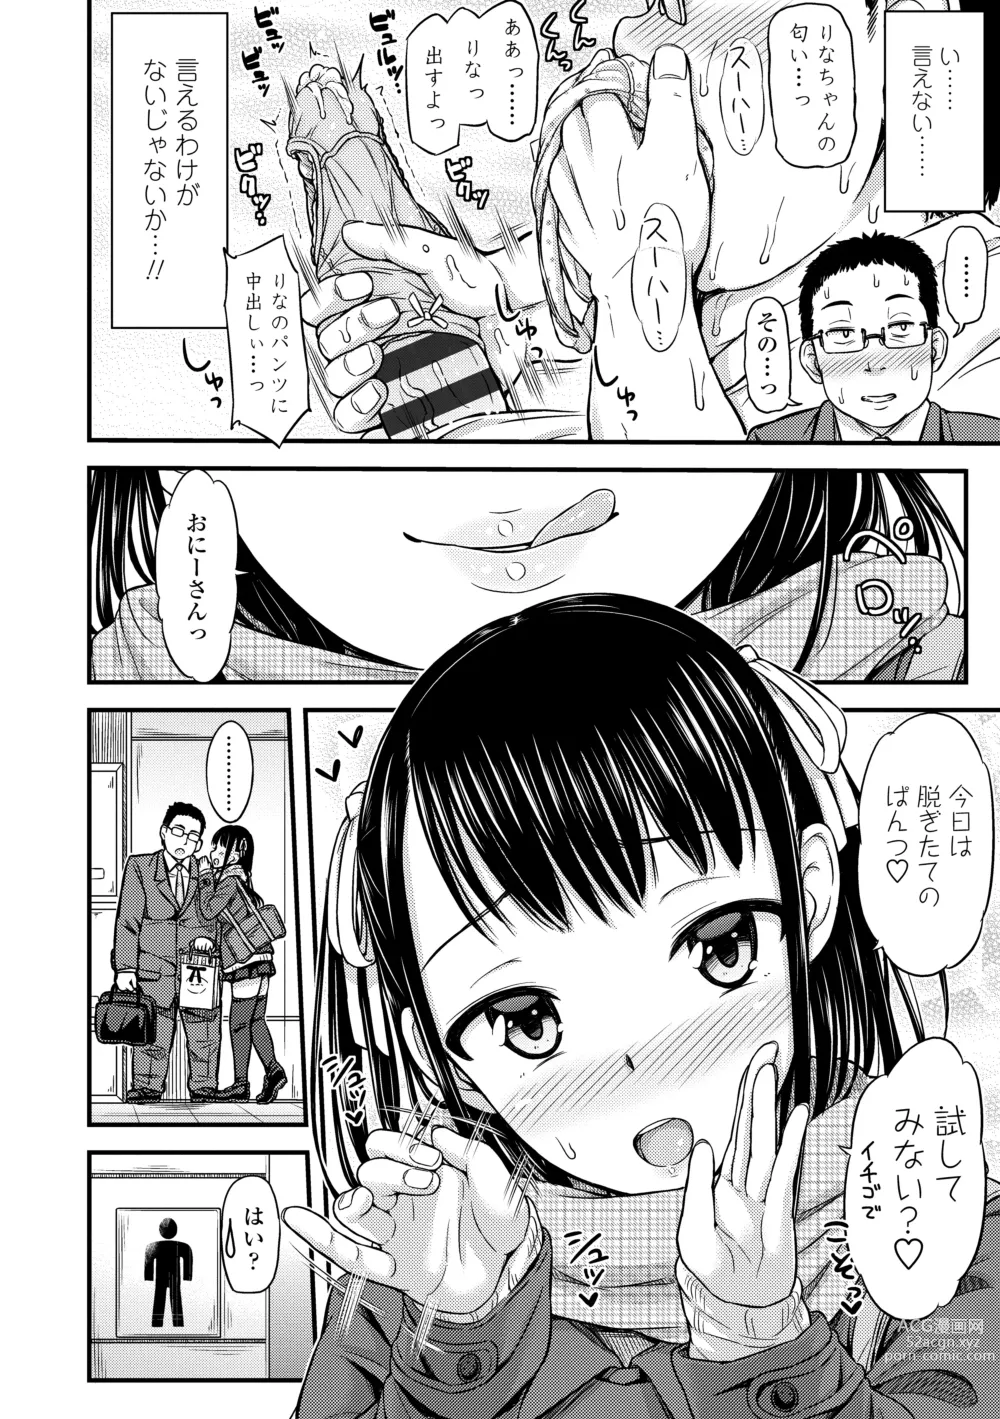 Page 8 of manga JK no Katachi